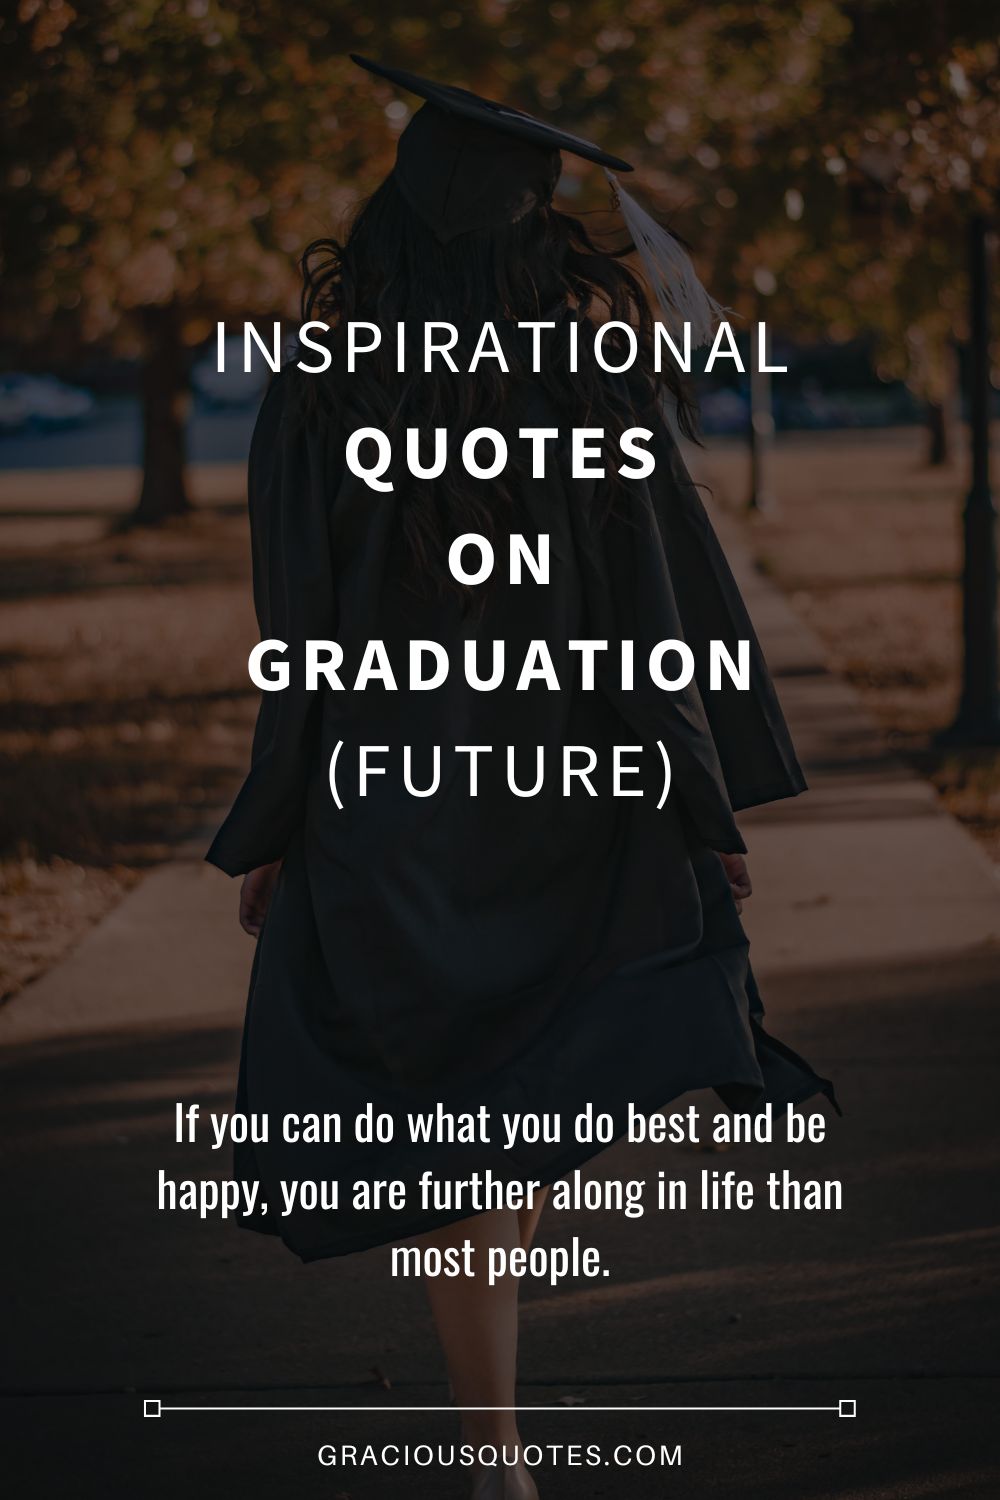 Inspirational Quotes on Graduation (FUTURE) - Gracious Quotes